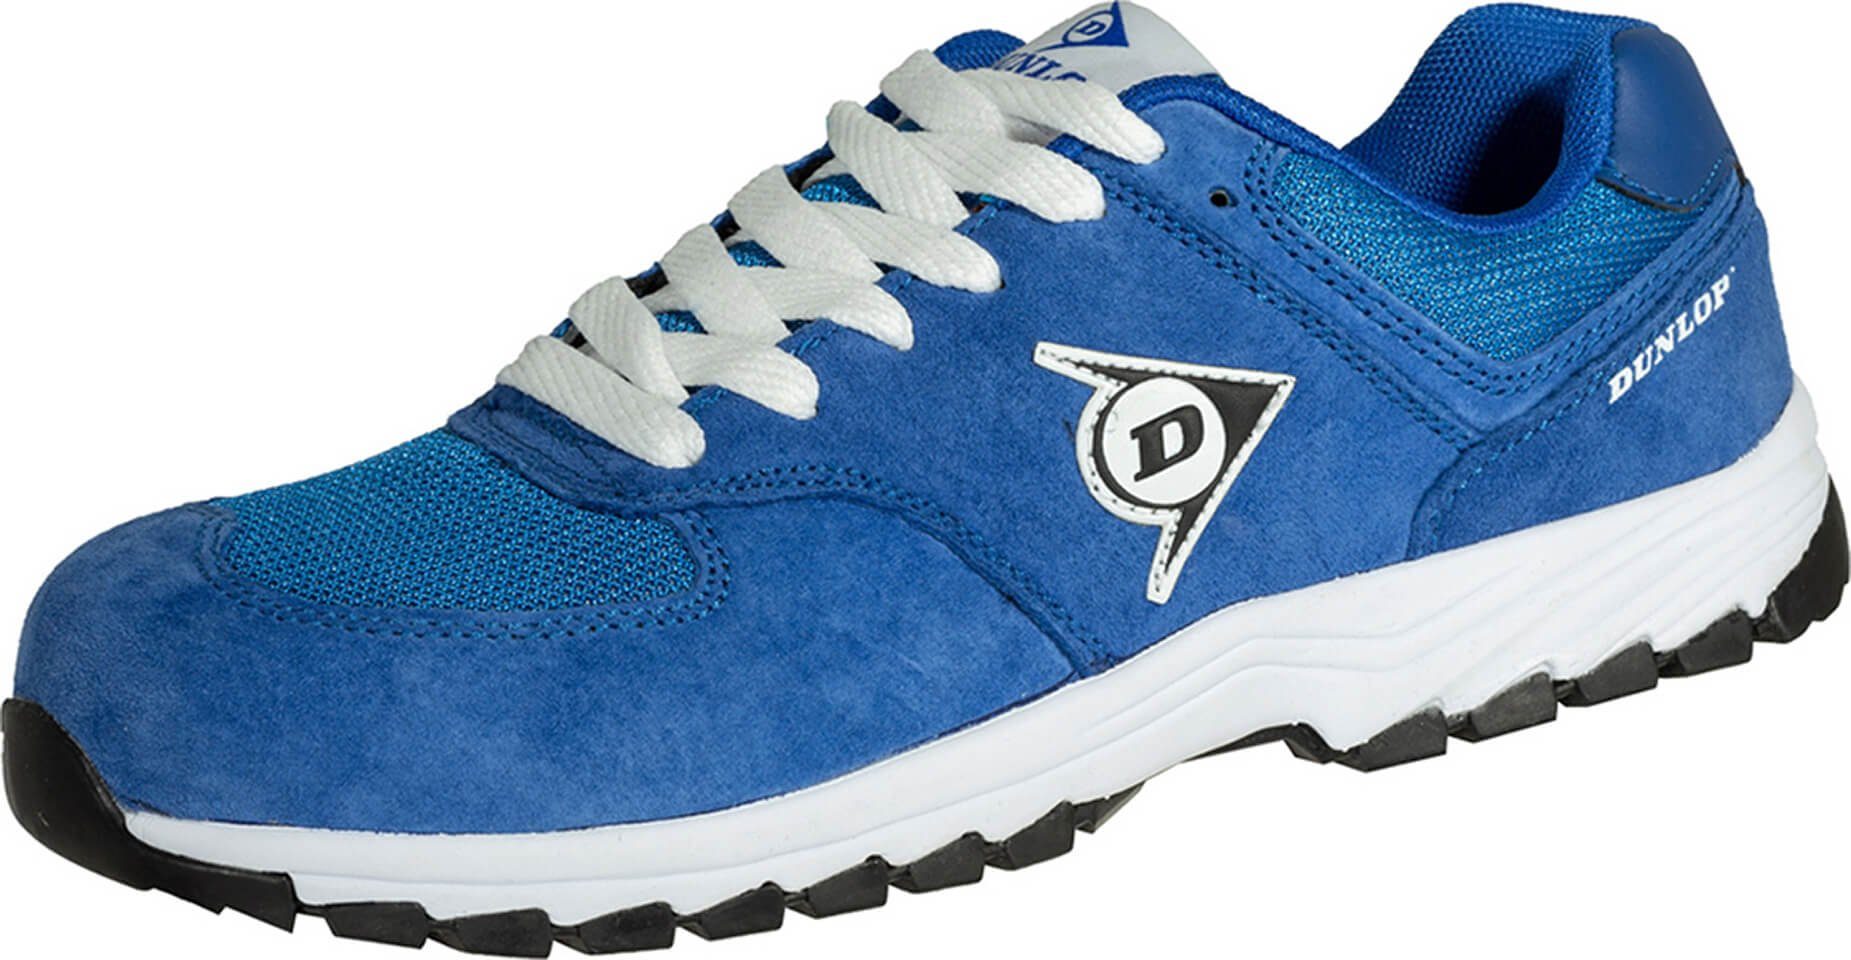 Flying Arrow blau S3 Sicherheitsschuh Dunlop_Workwear